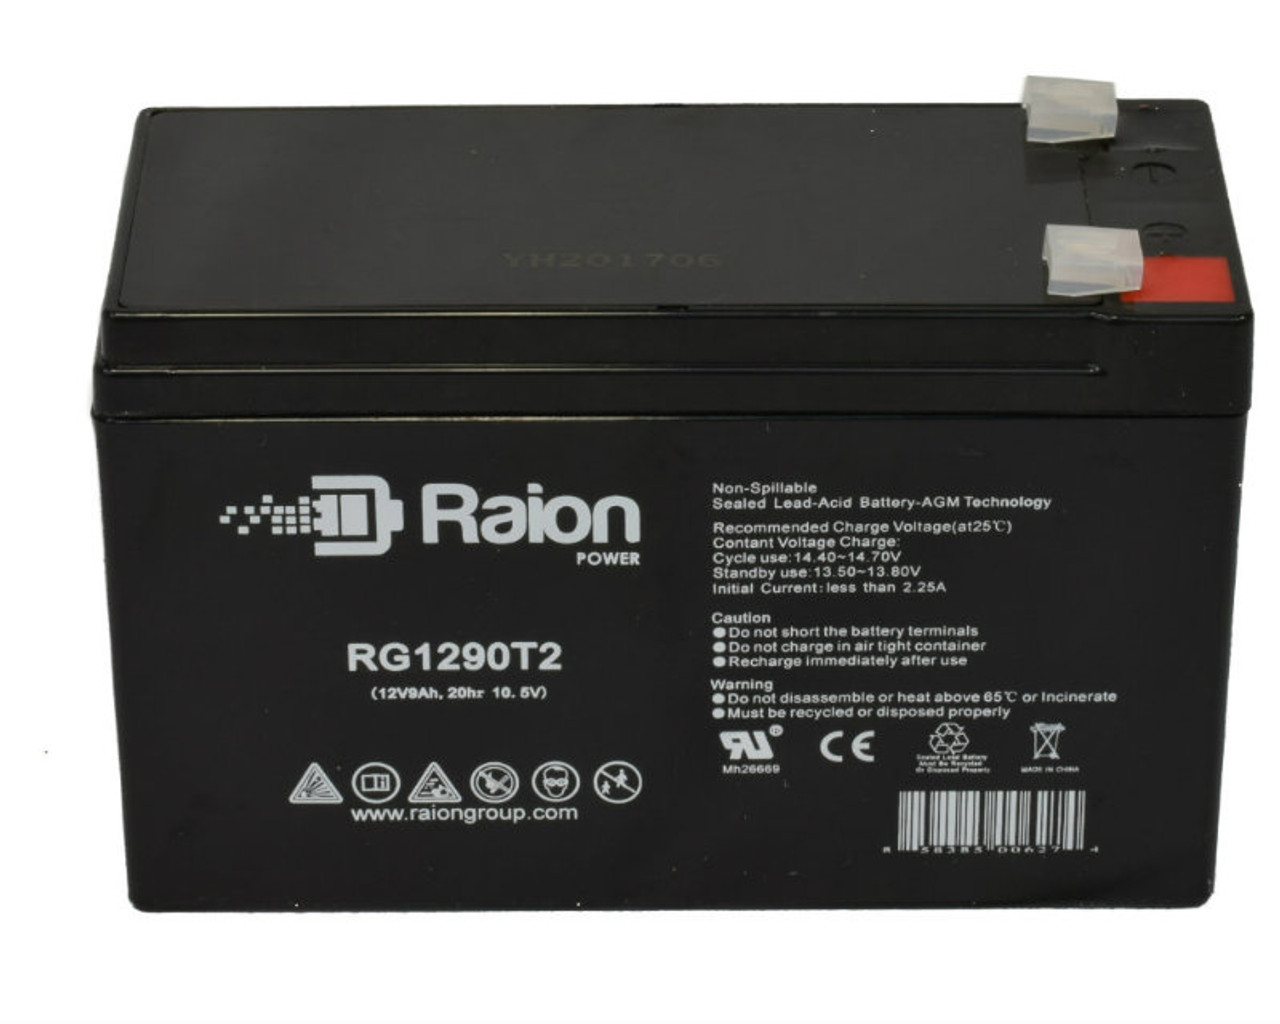 Raion Power RG1290T2 12V 9Ah Lead Acid Battery for Vision CP1275